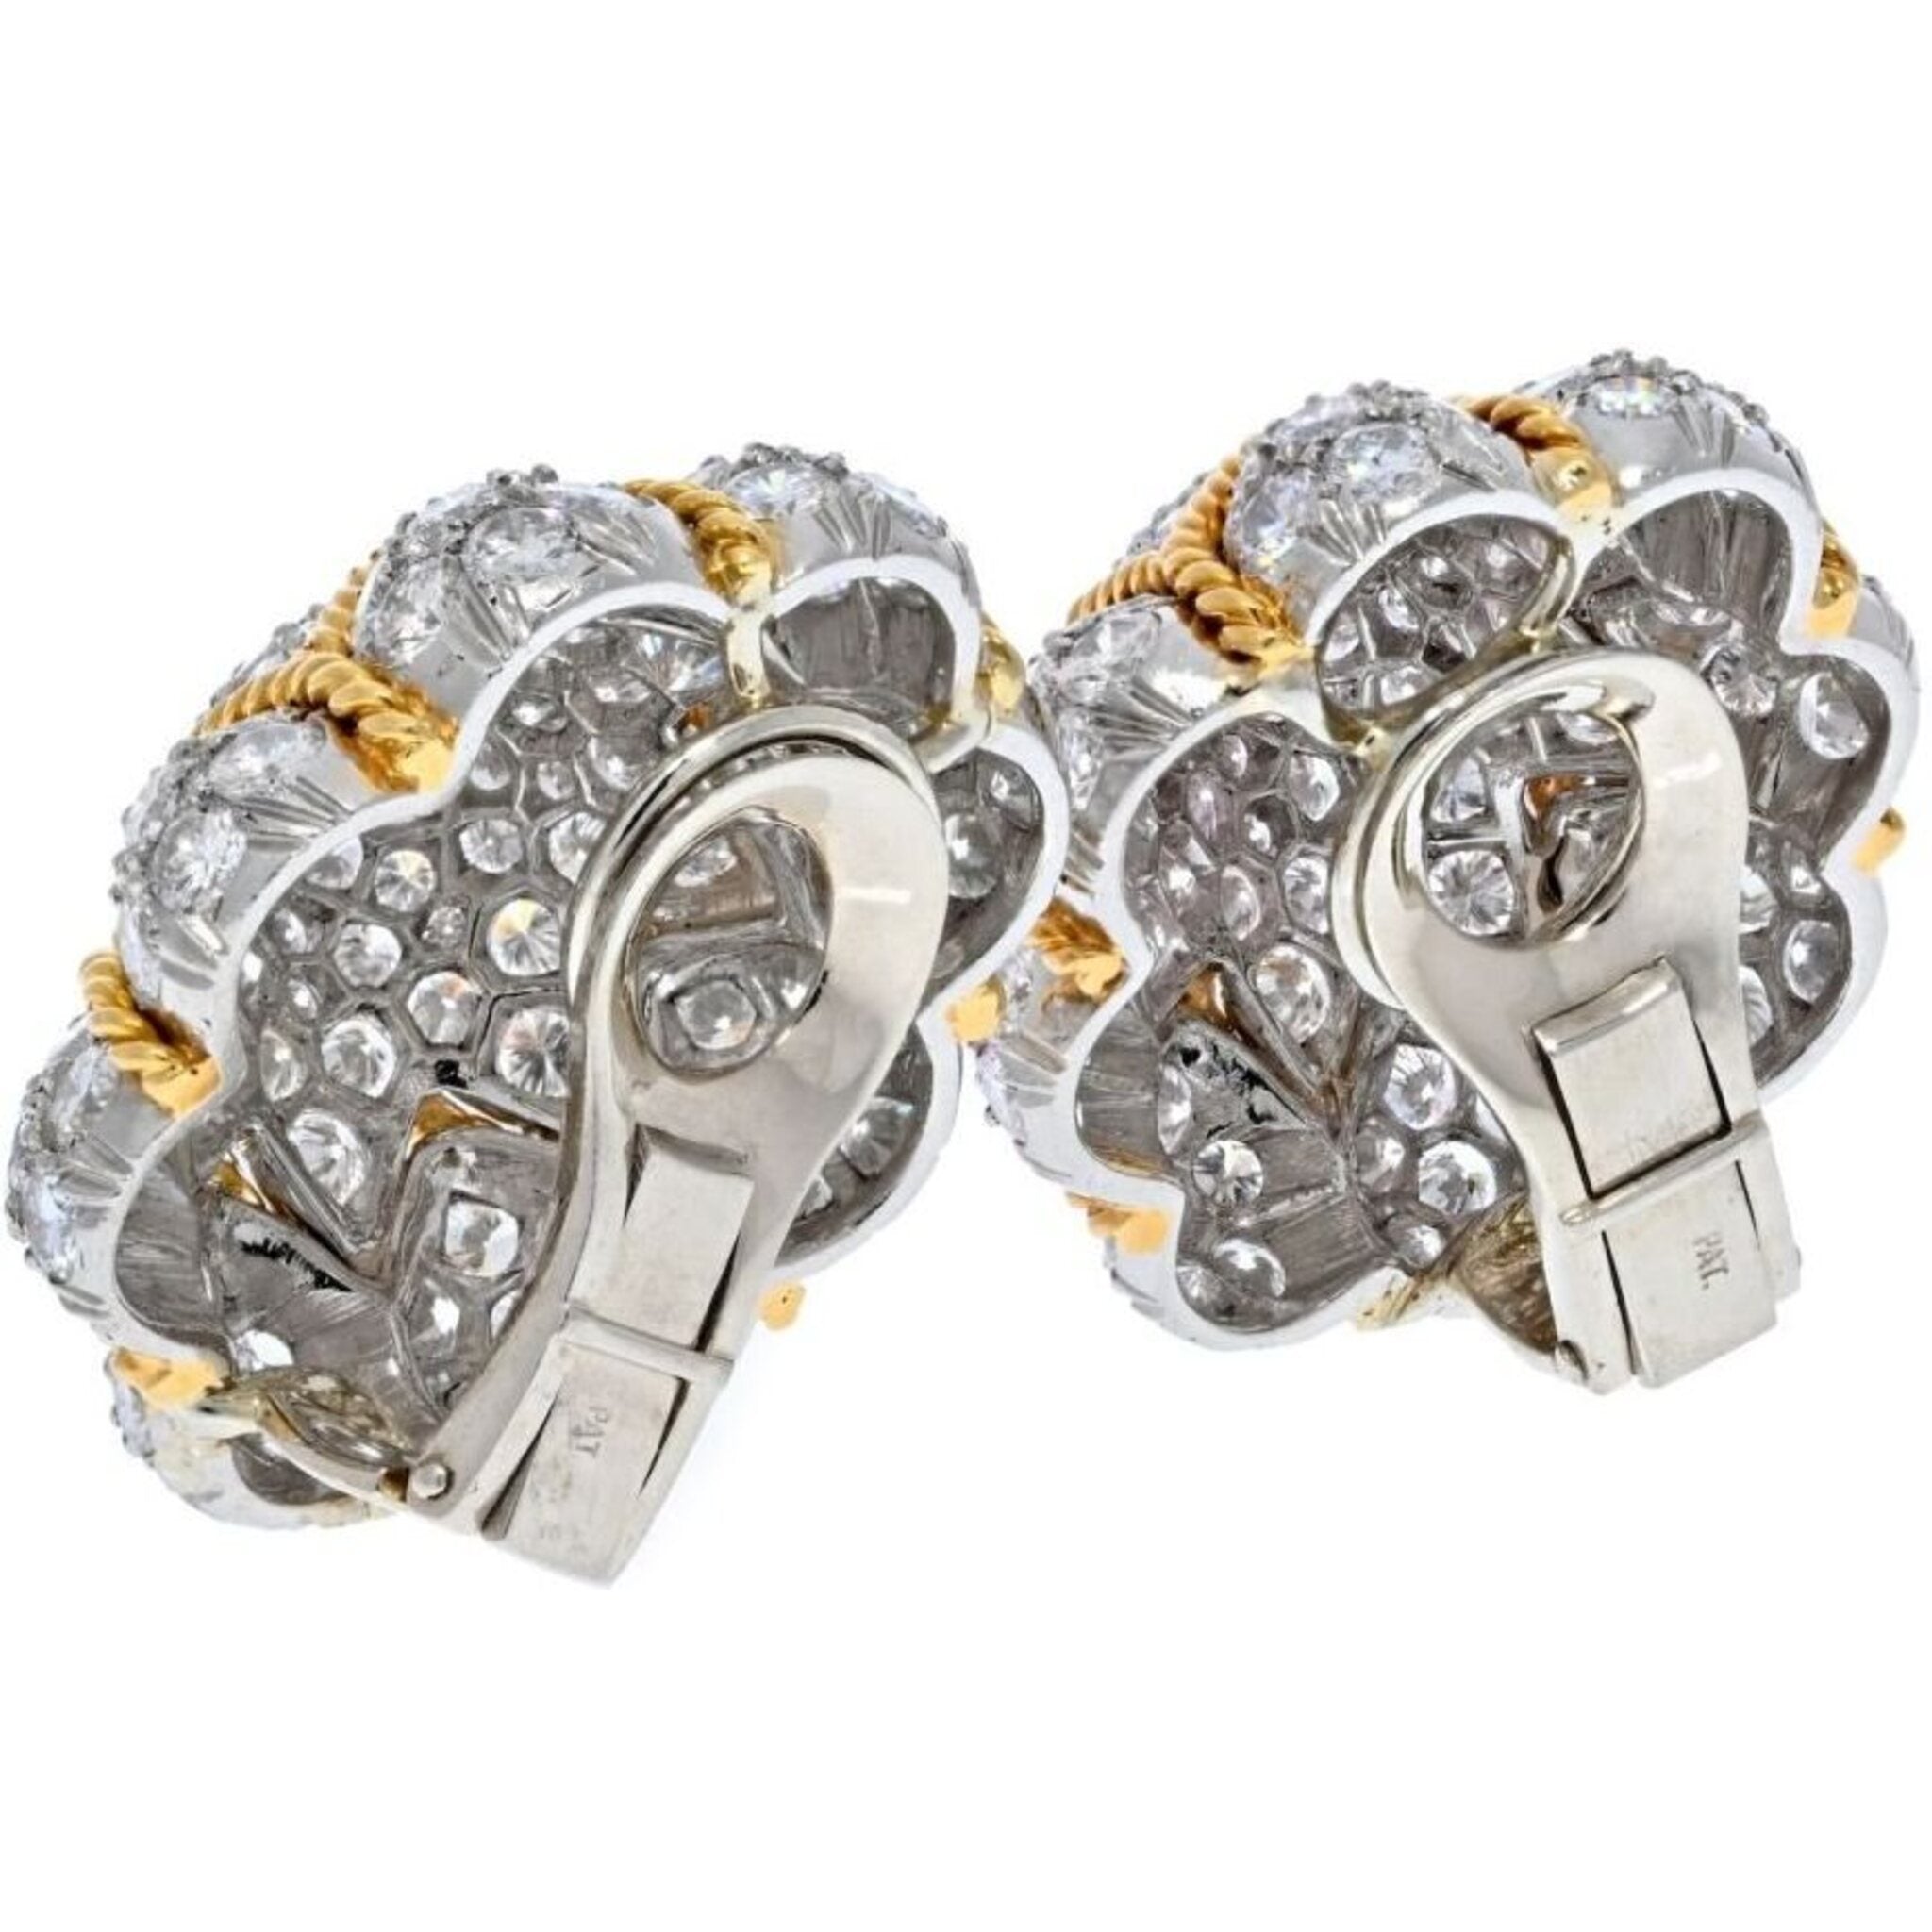 14 carat Gold Filled Stud Earrings